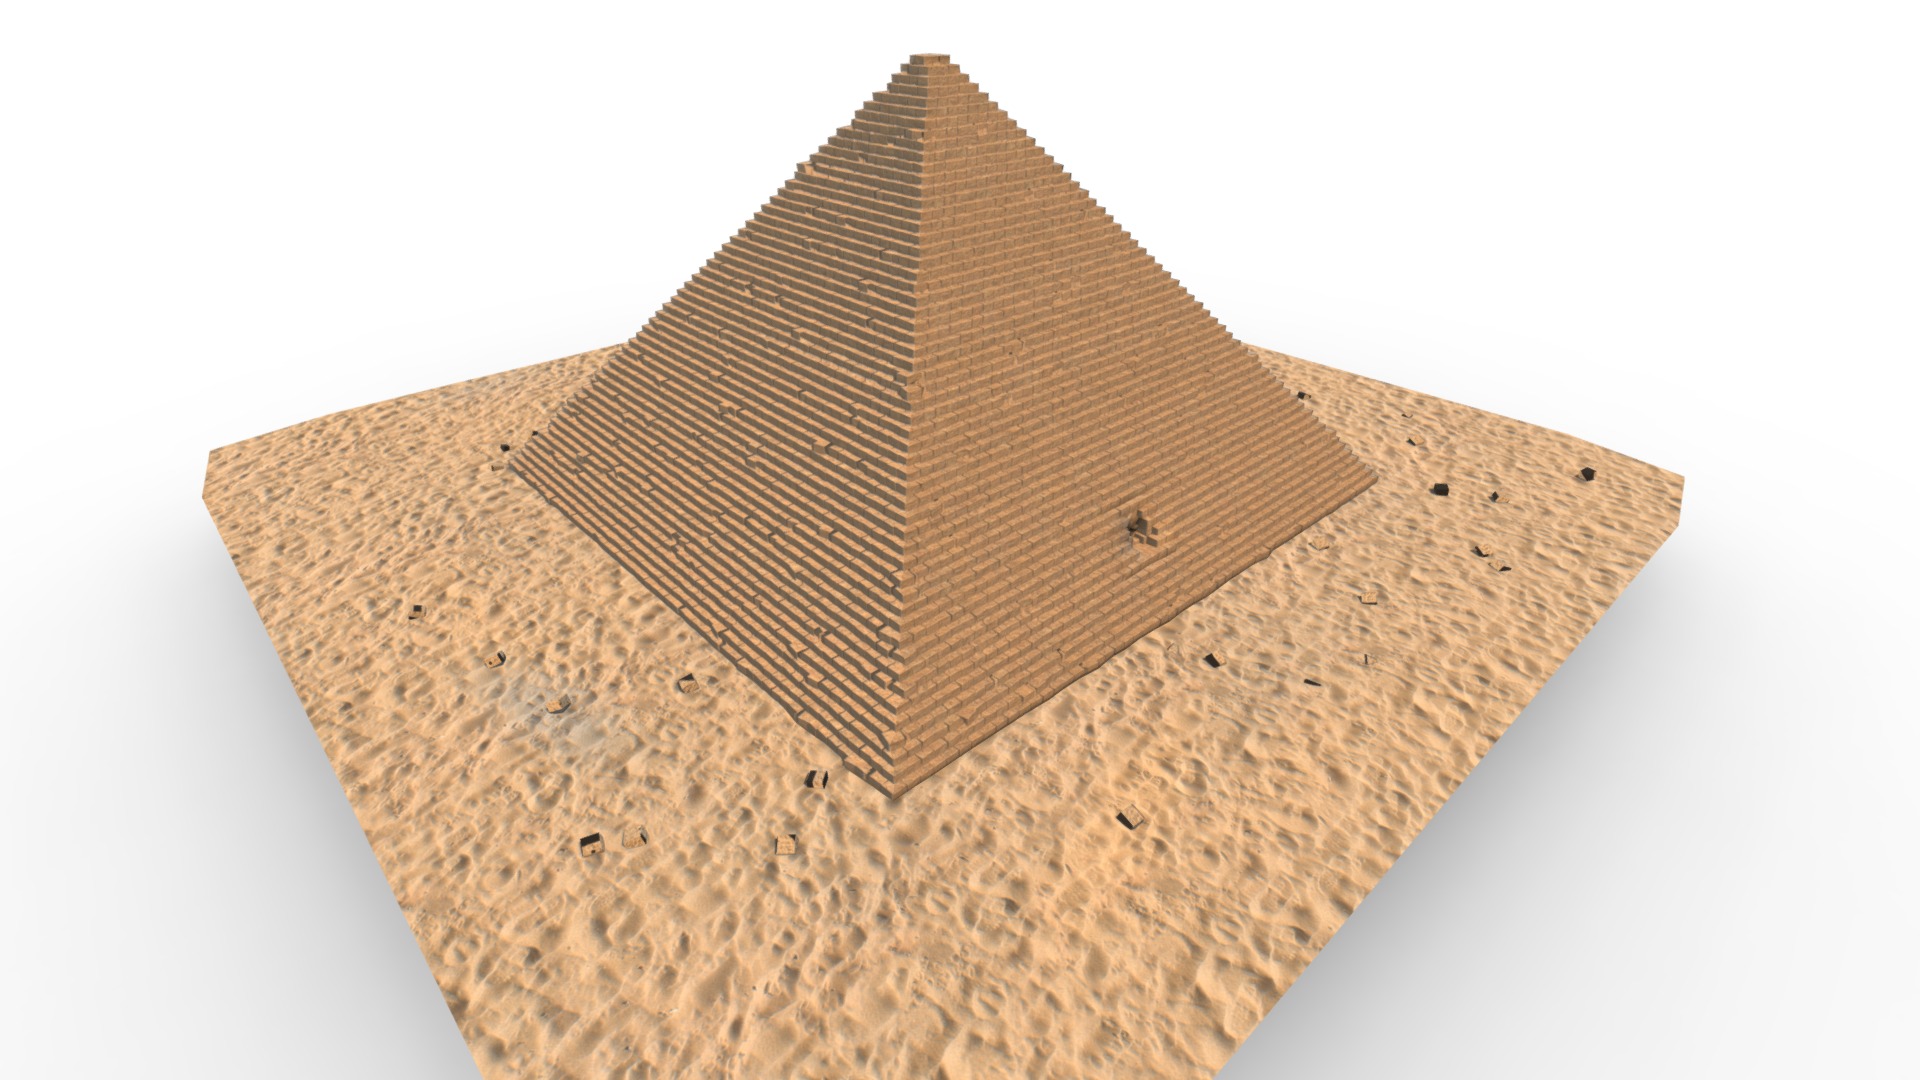 pyramid sketch - 31 Free Vectors to Download | FreeVectors